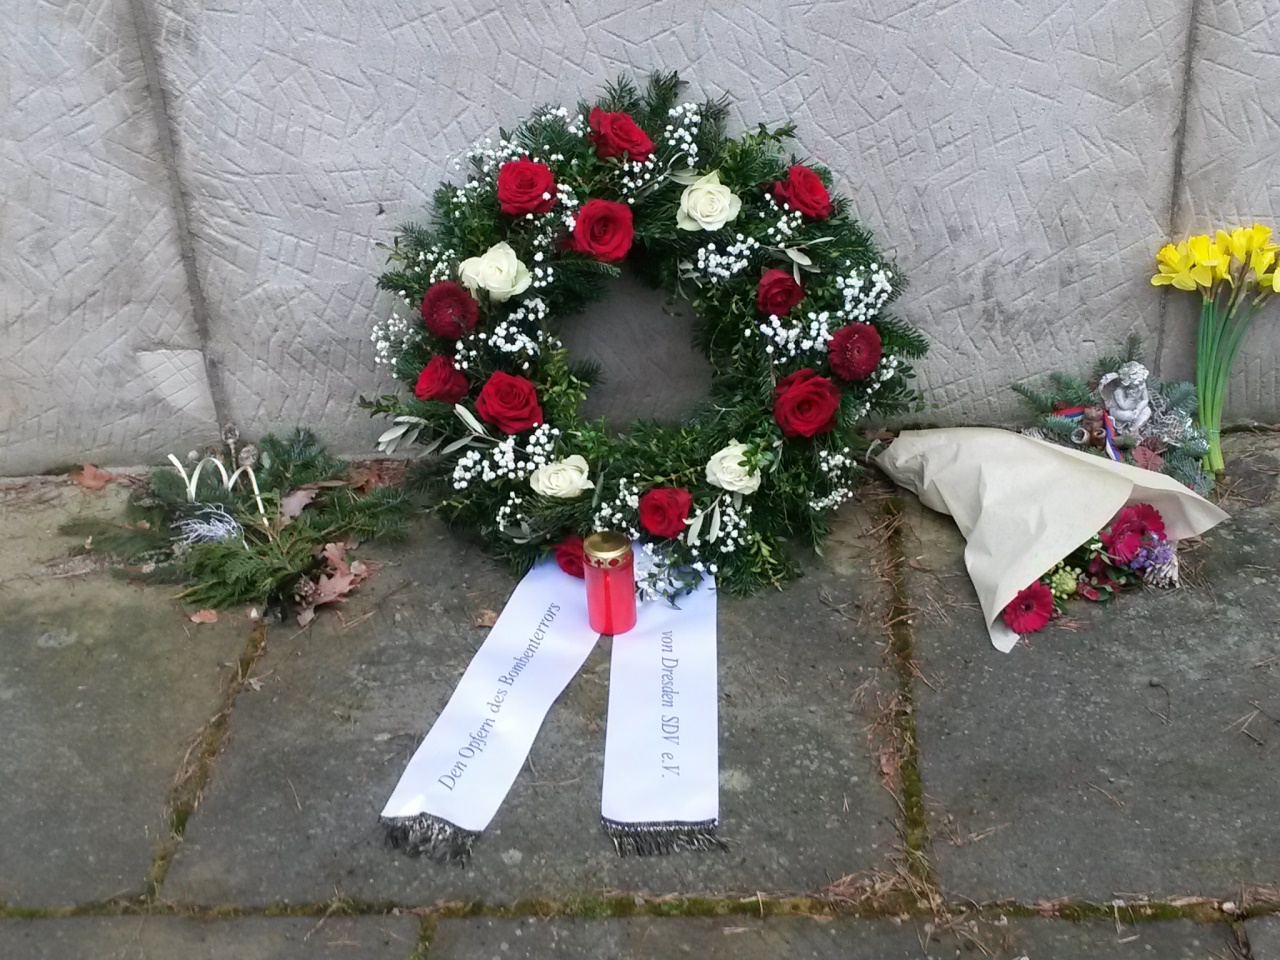 Gedenken an die Bombenopfer in Dresden